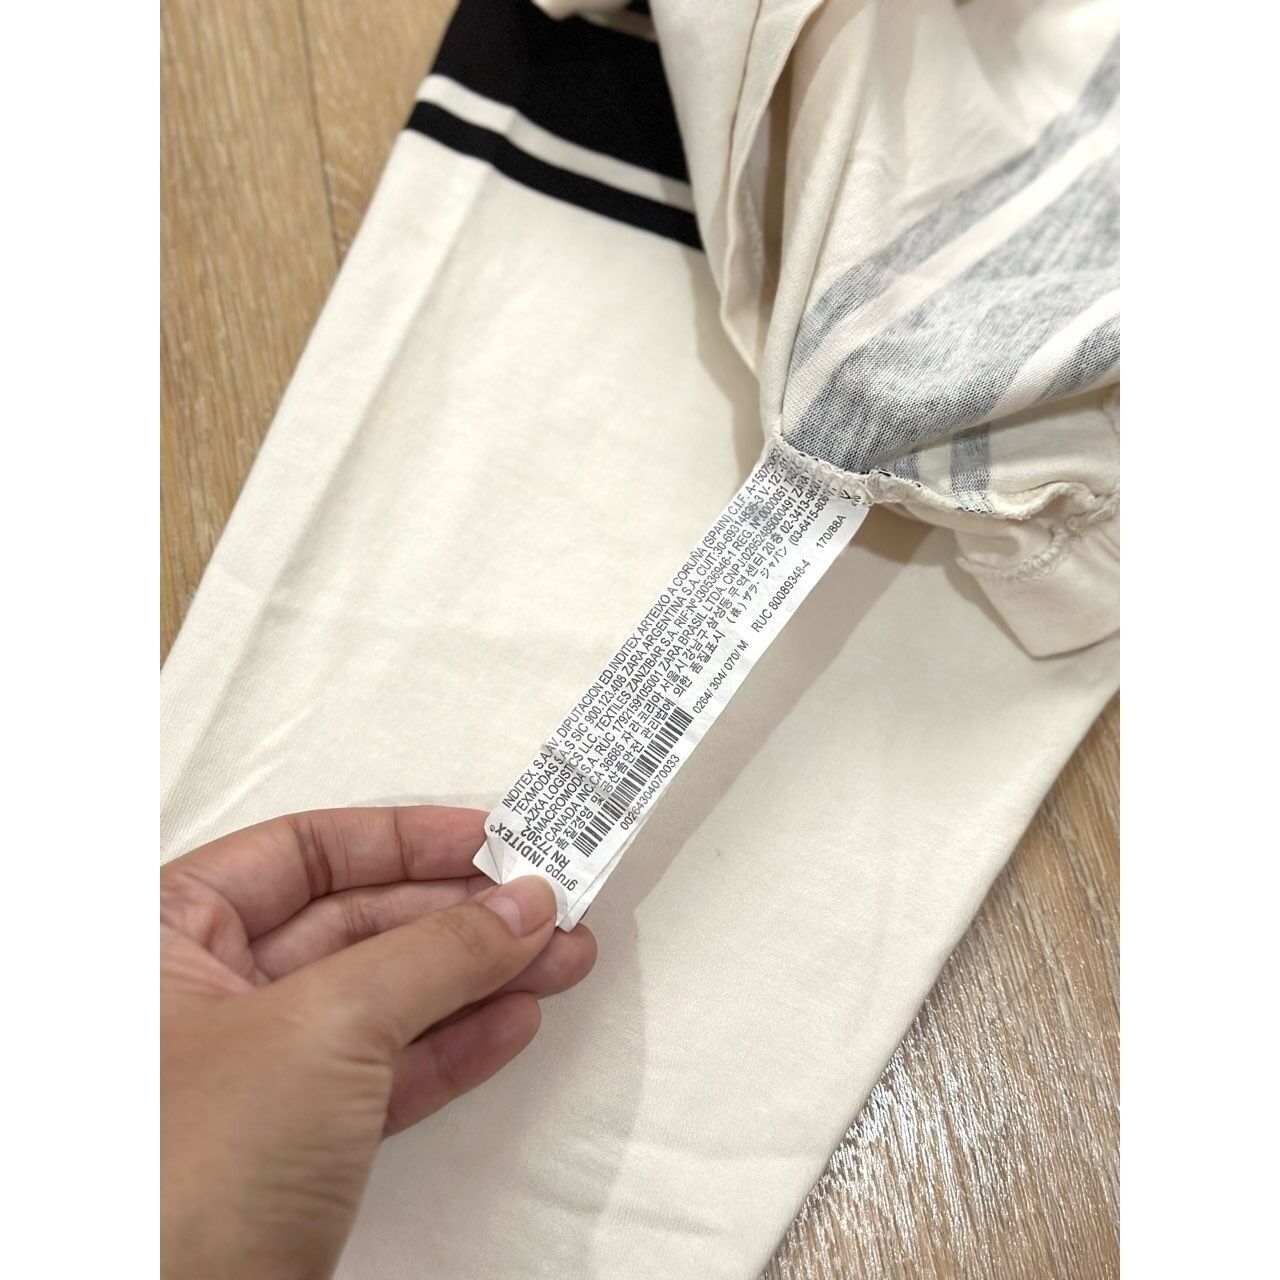 Zara Stripped Polo Long Sleeve Shirt